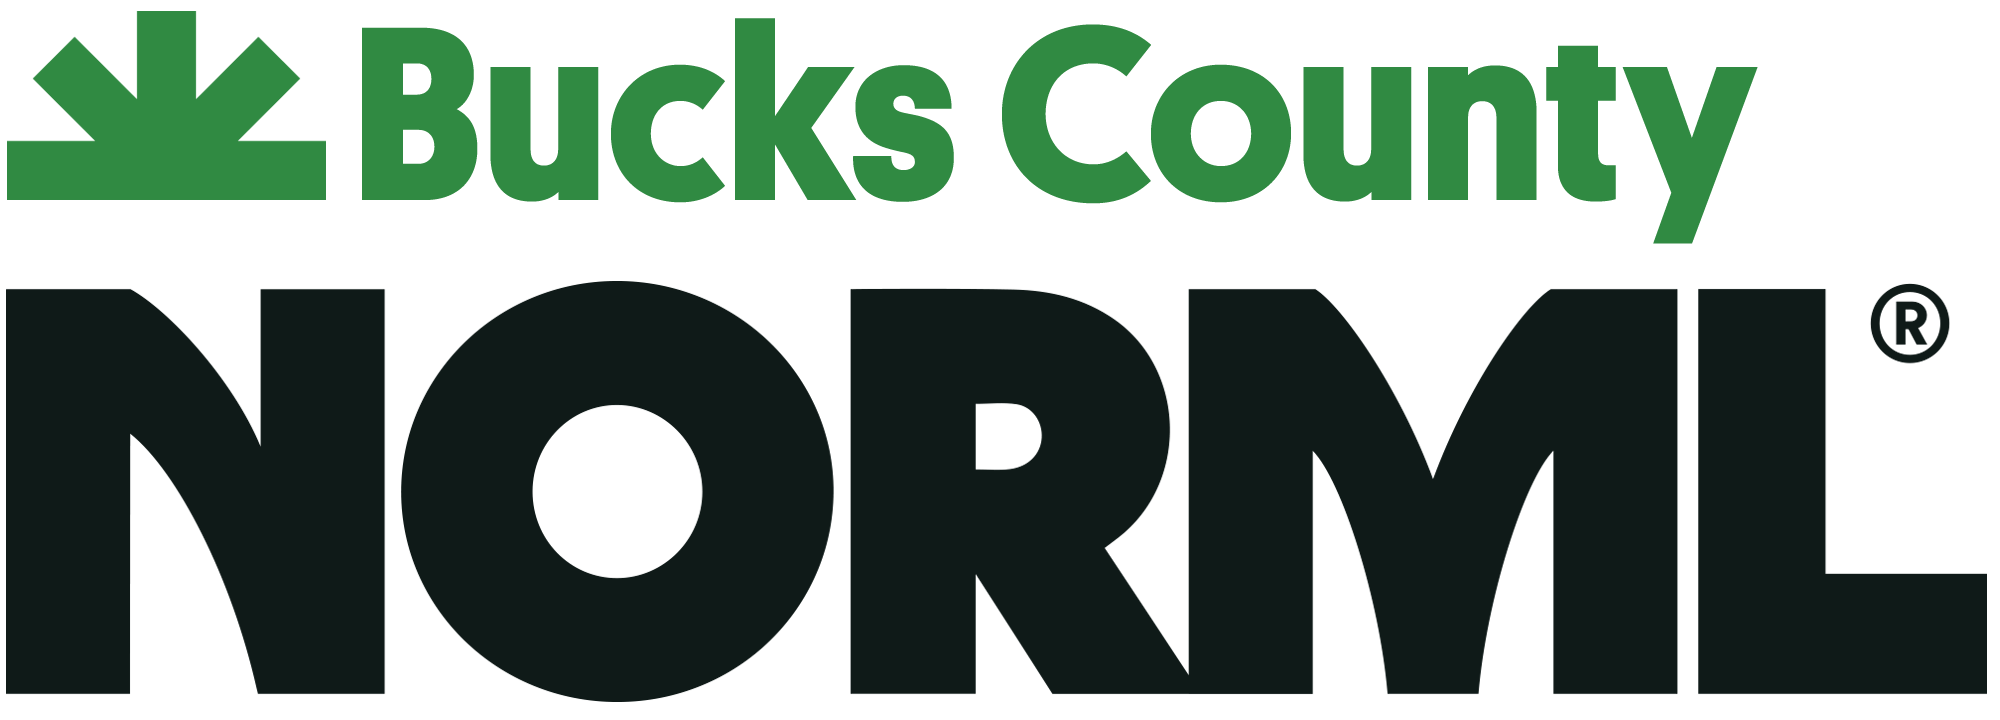 Bucks County NORML